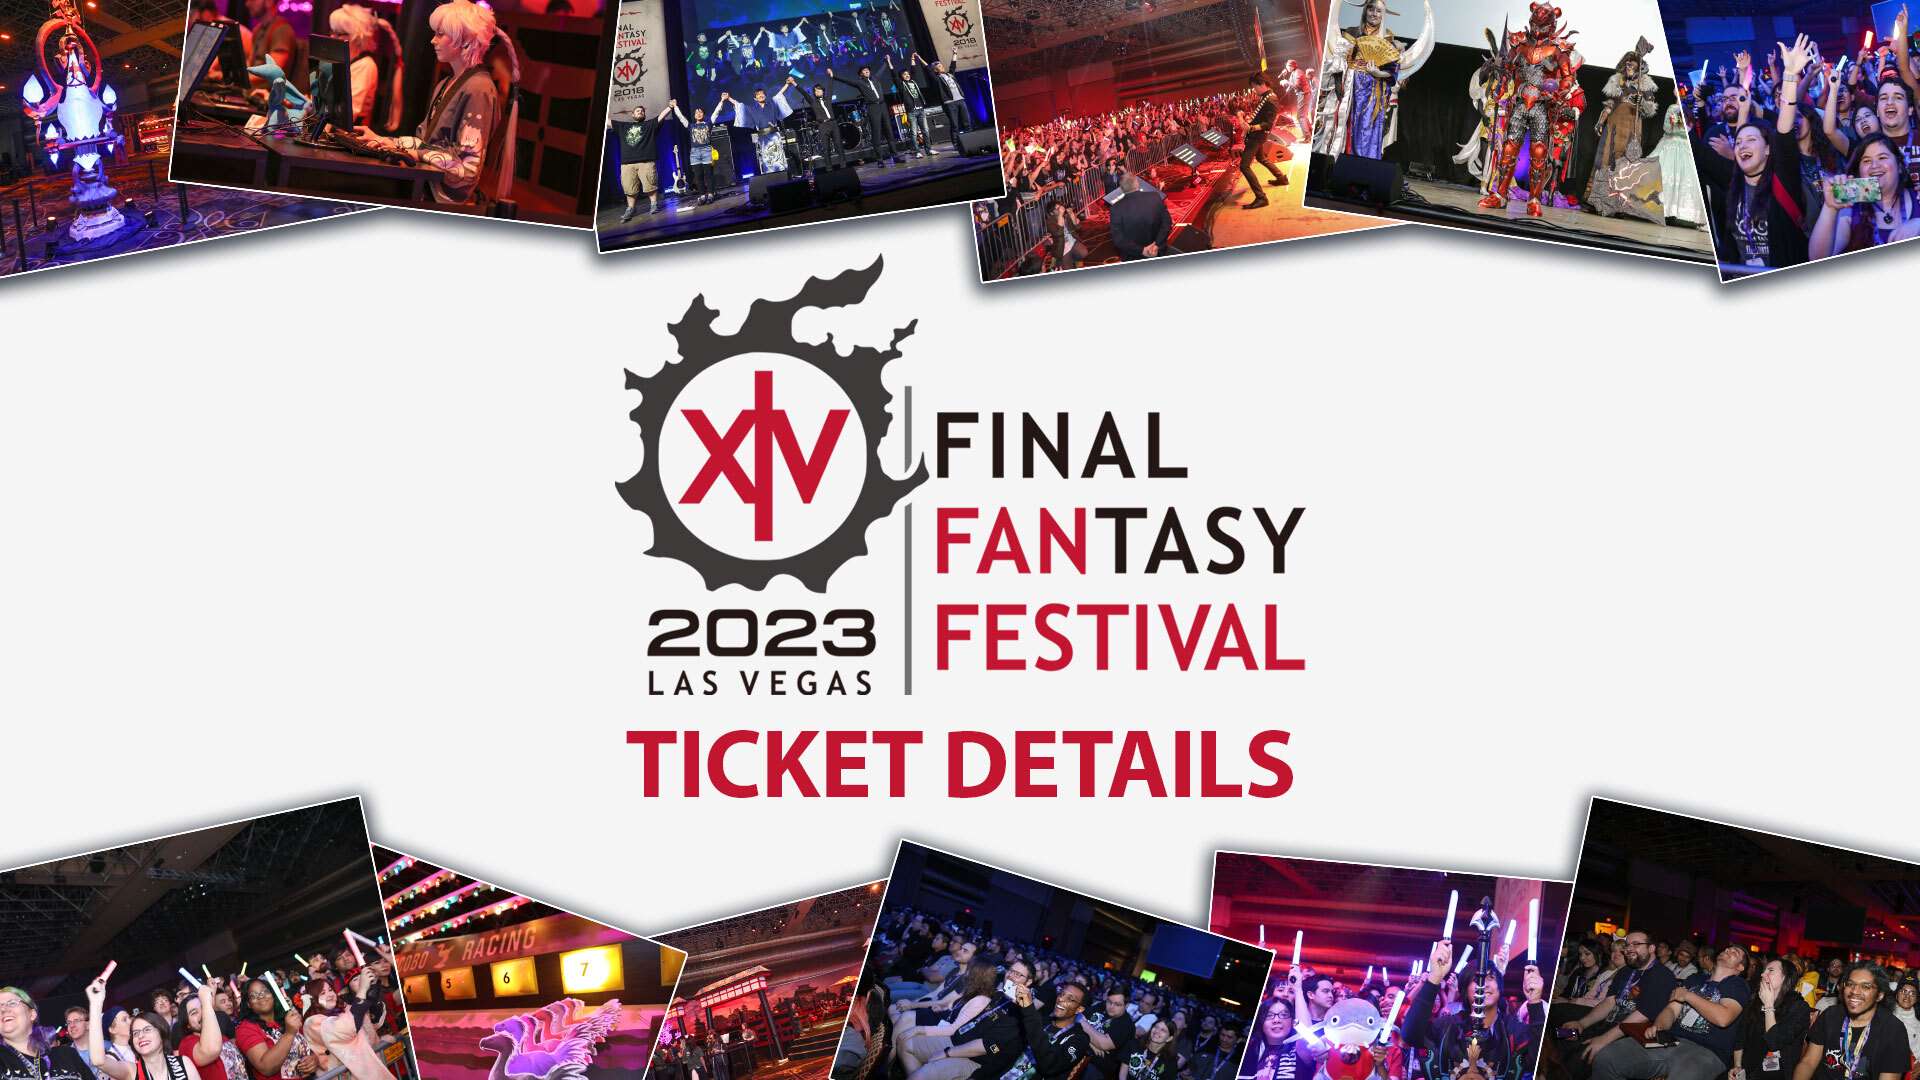 Fan Festival 2023 i Las Vegas -logoet med